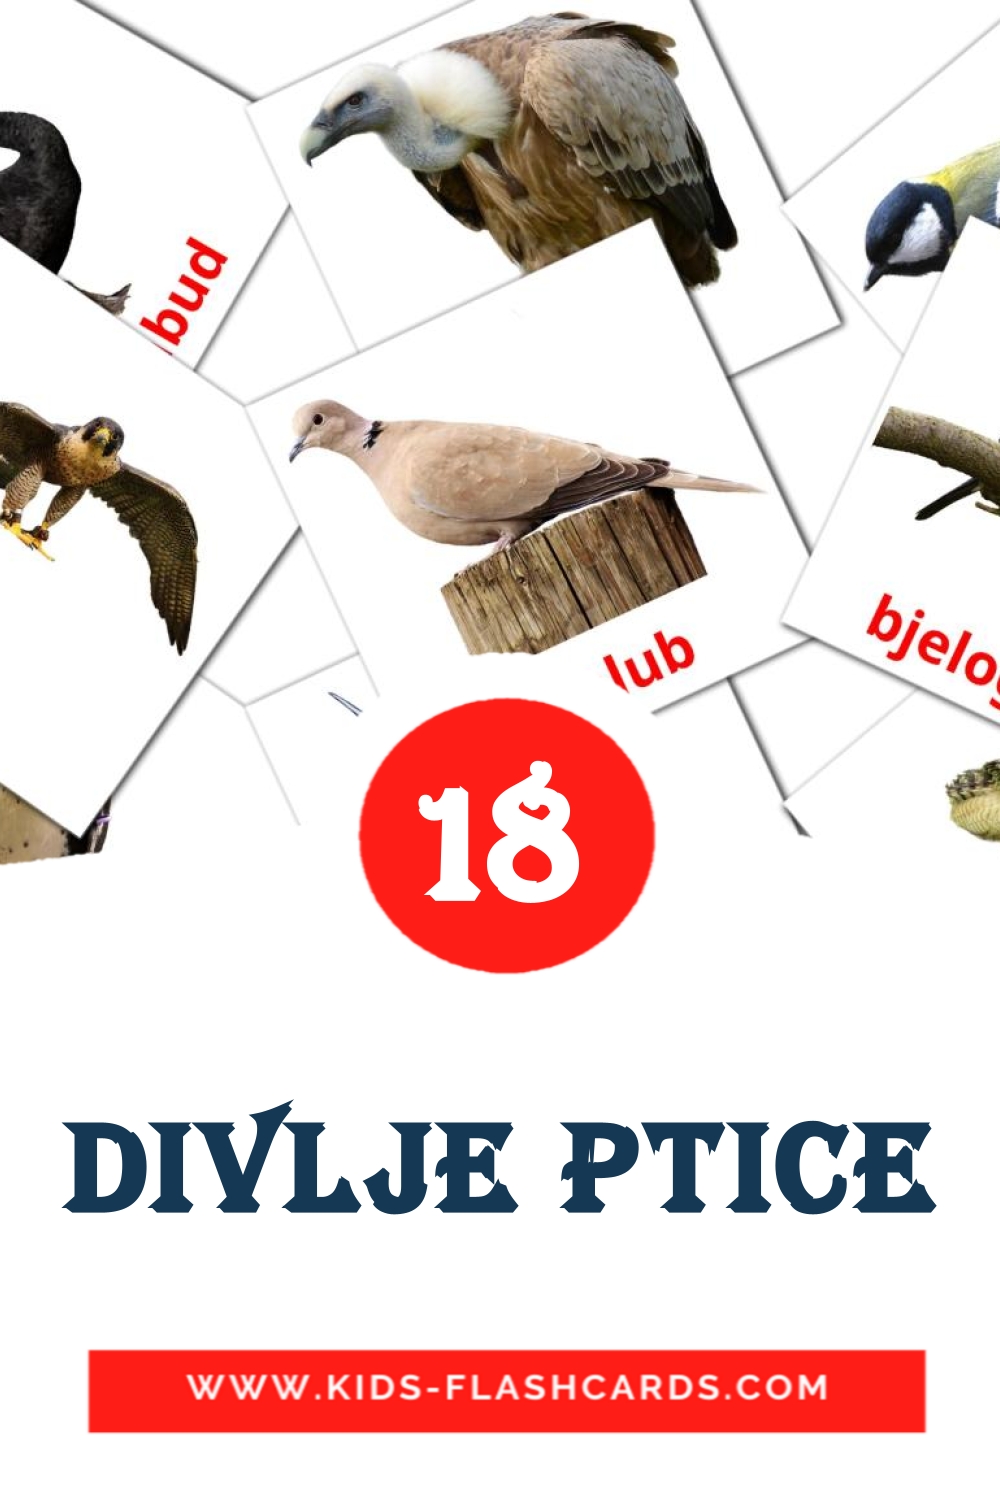 divlje ptice на боснийском для Детского Сада (18 карточек)